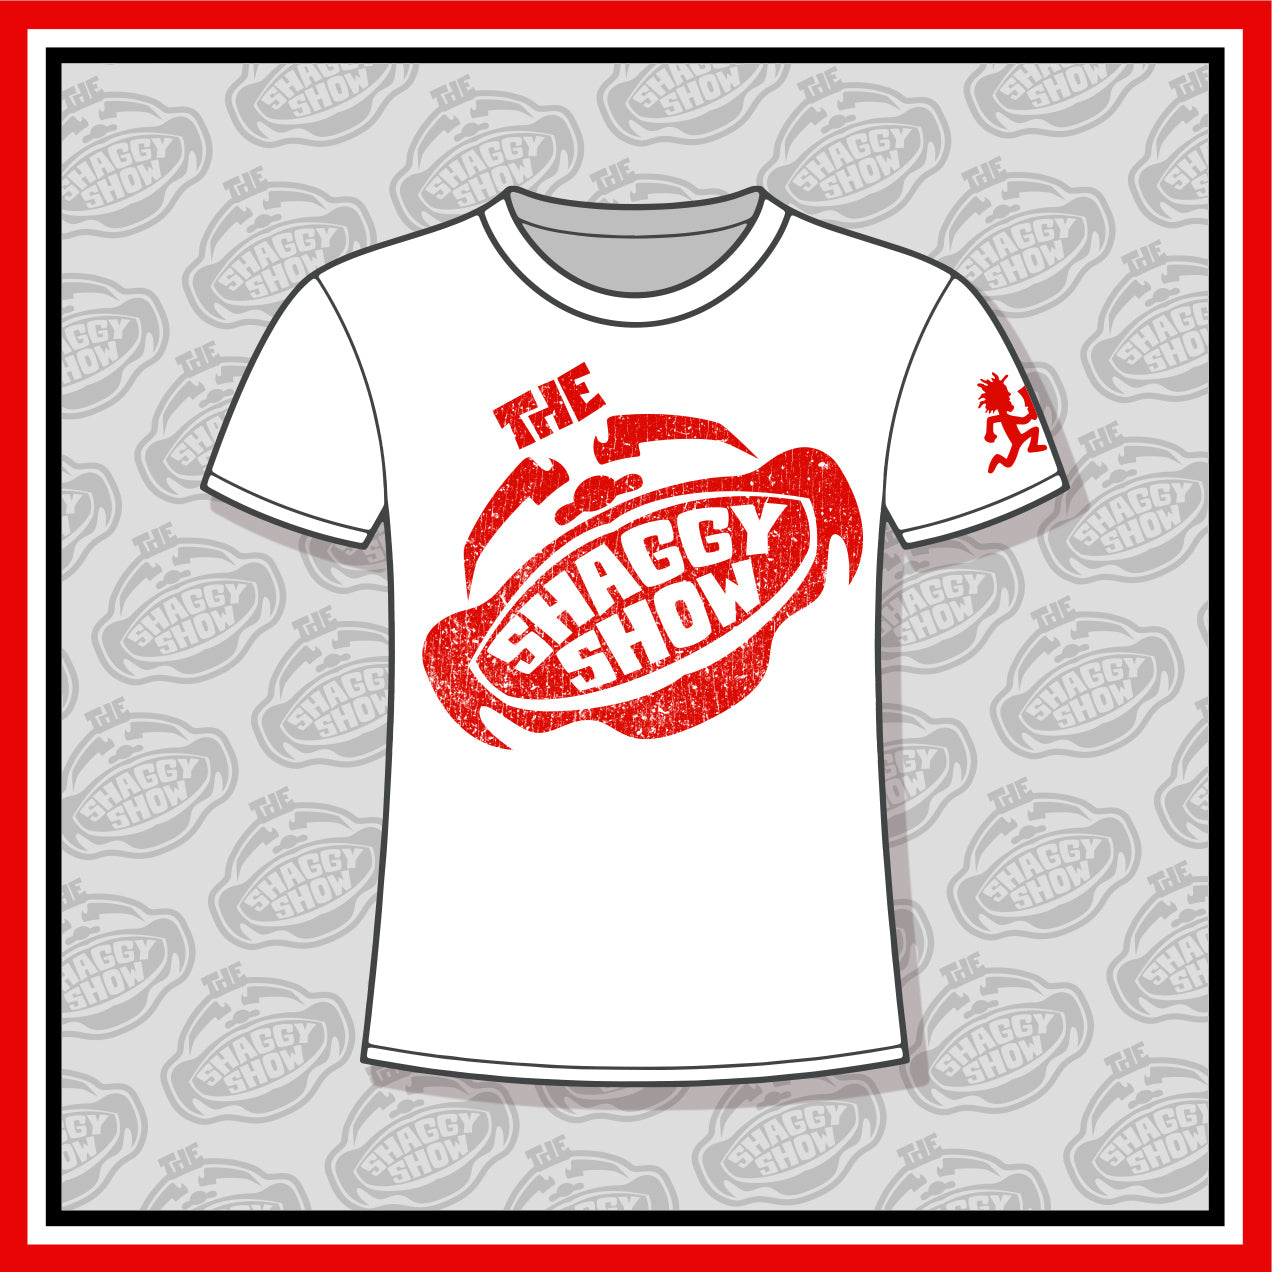 White Slanted Shaggy Show T-Shirt